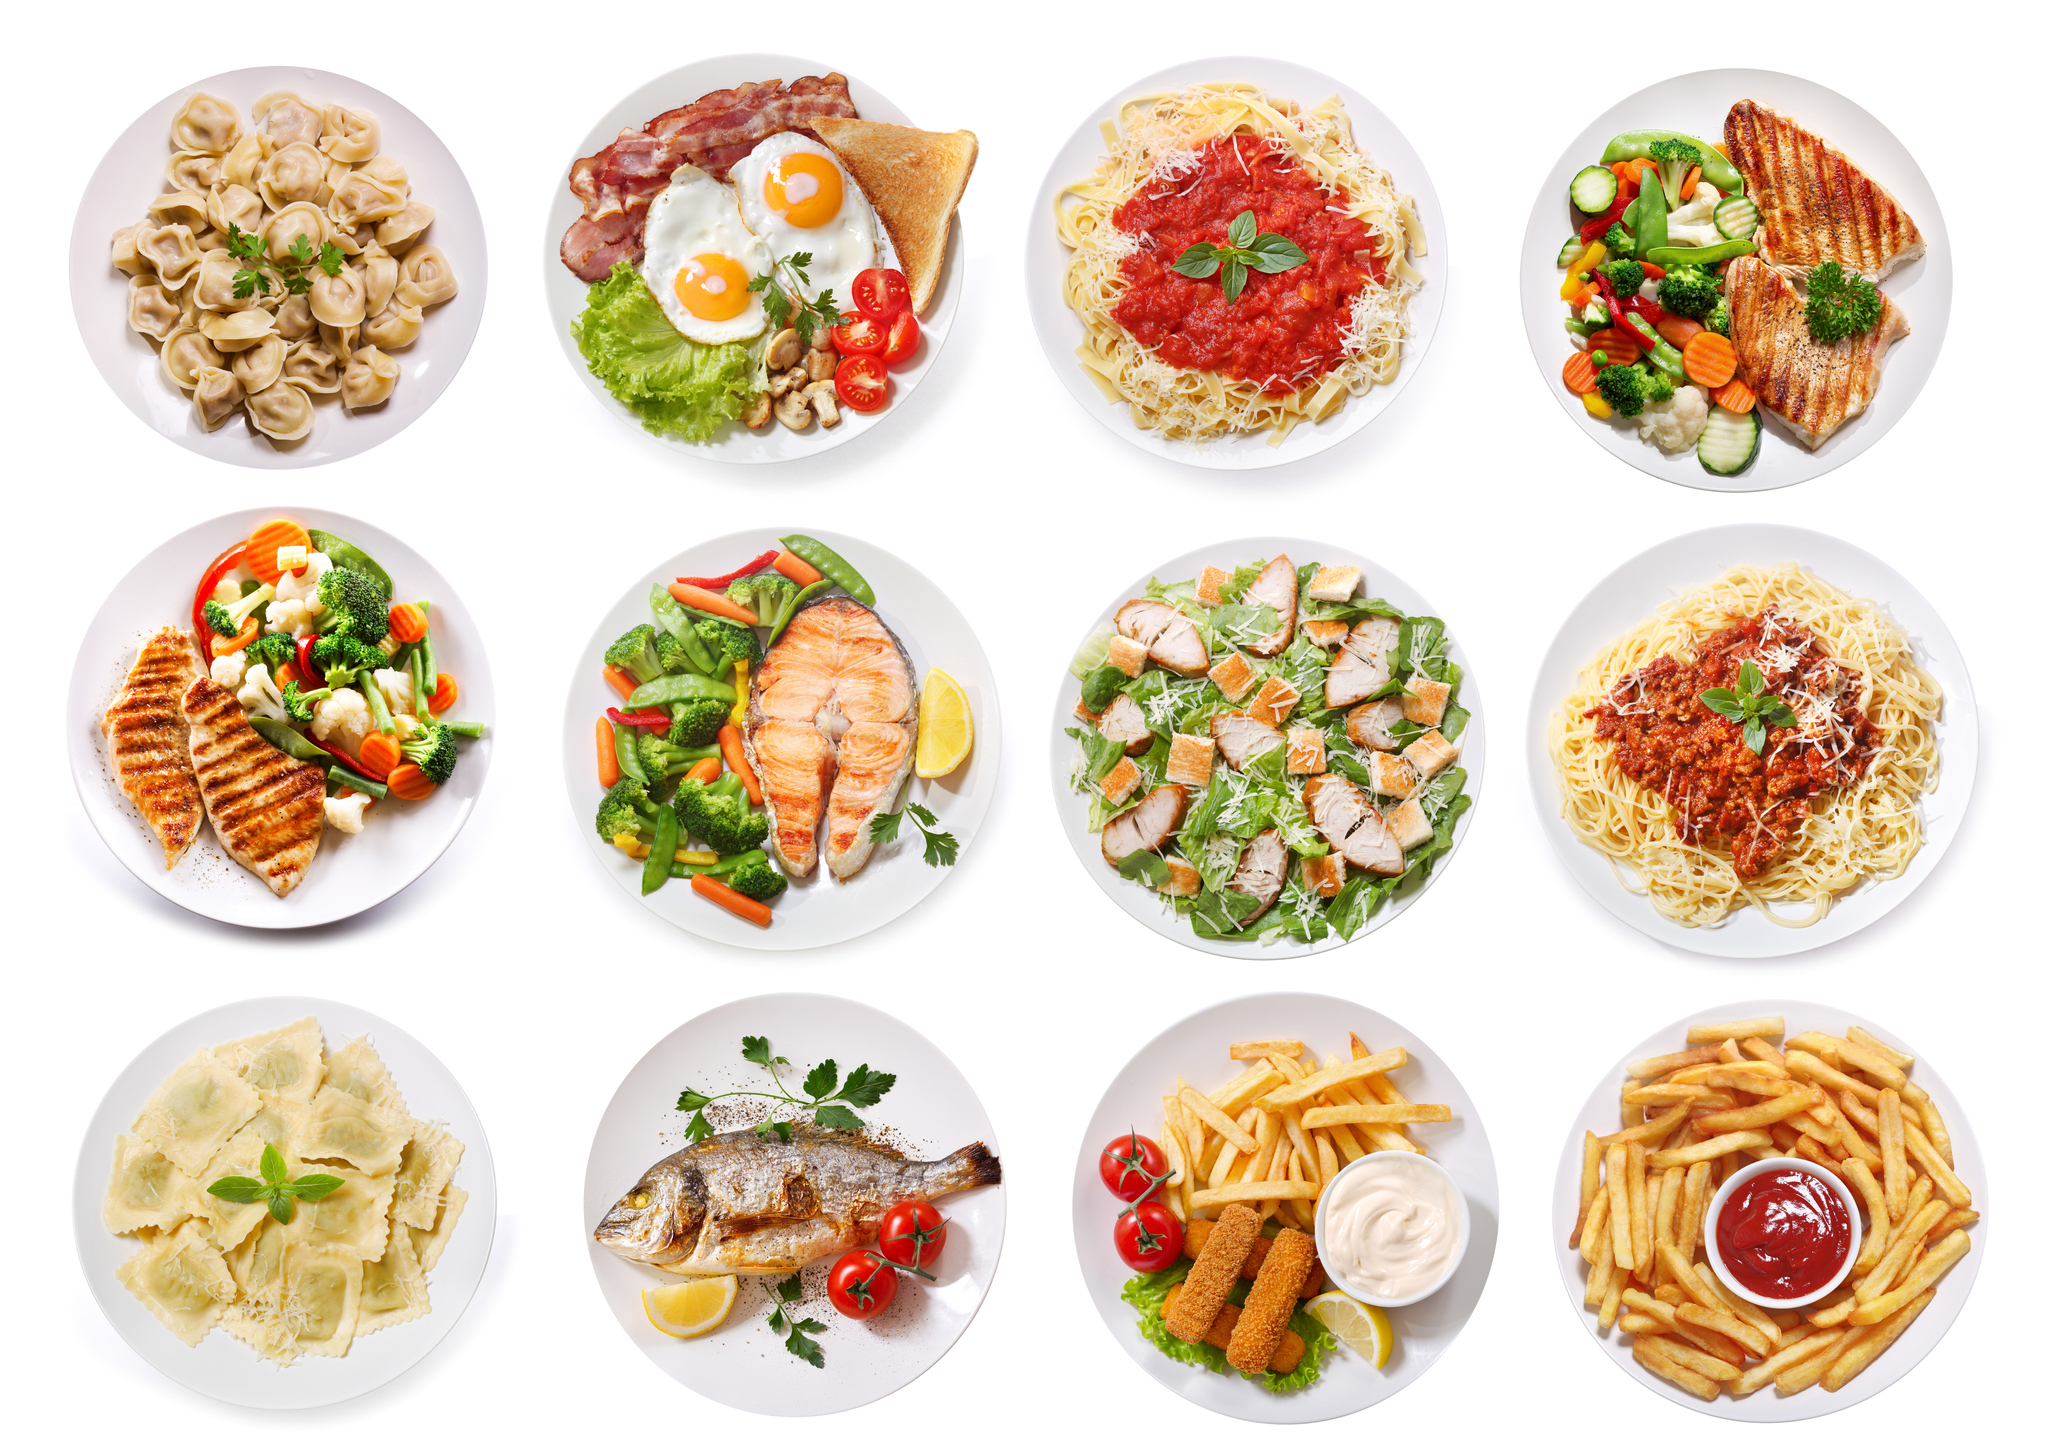 16 Best Mail-Order Food Companies Slideshow